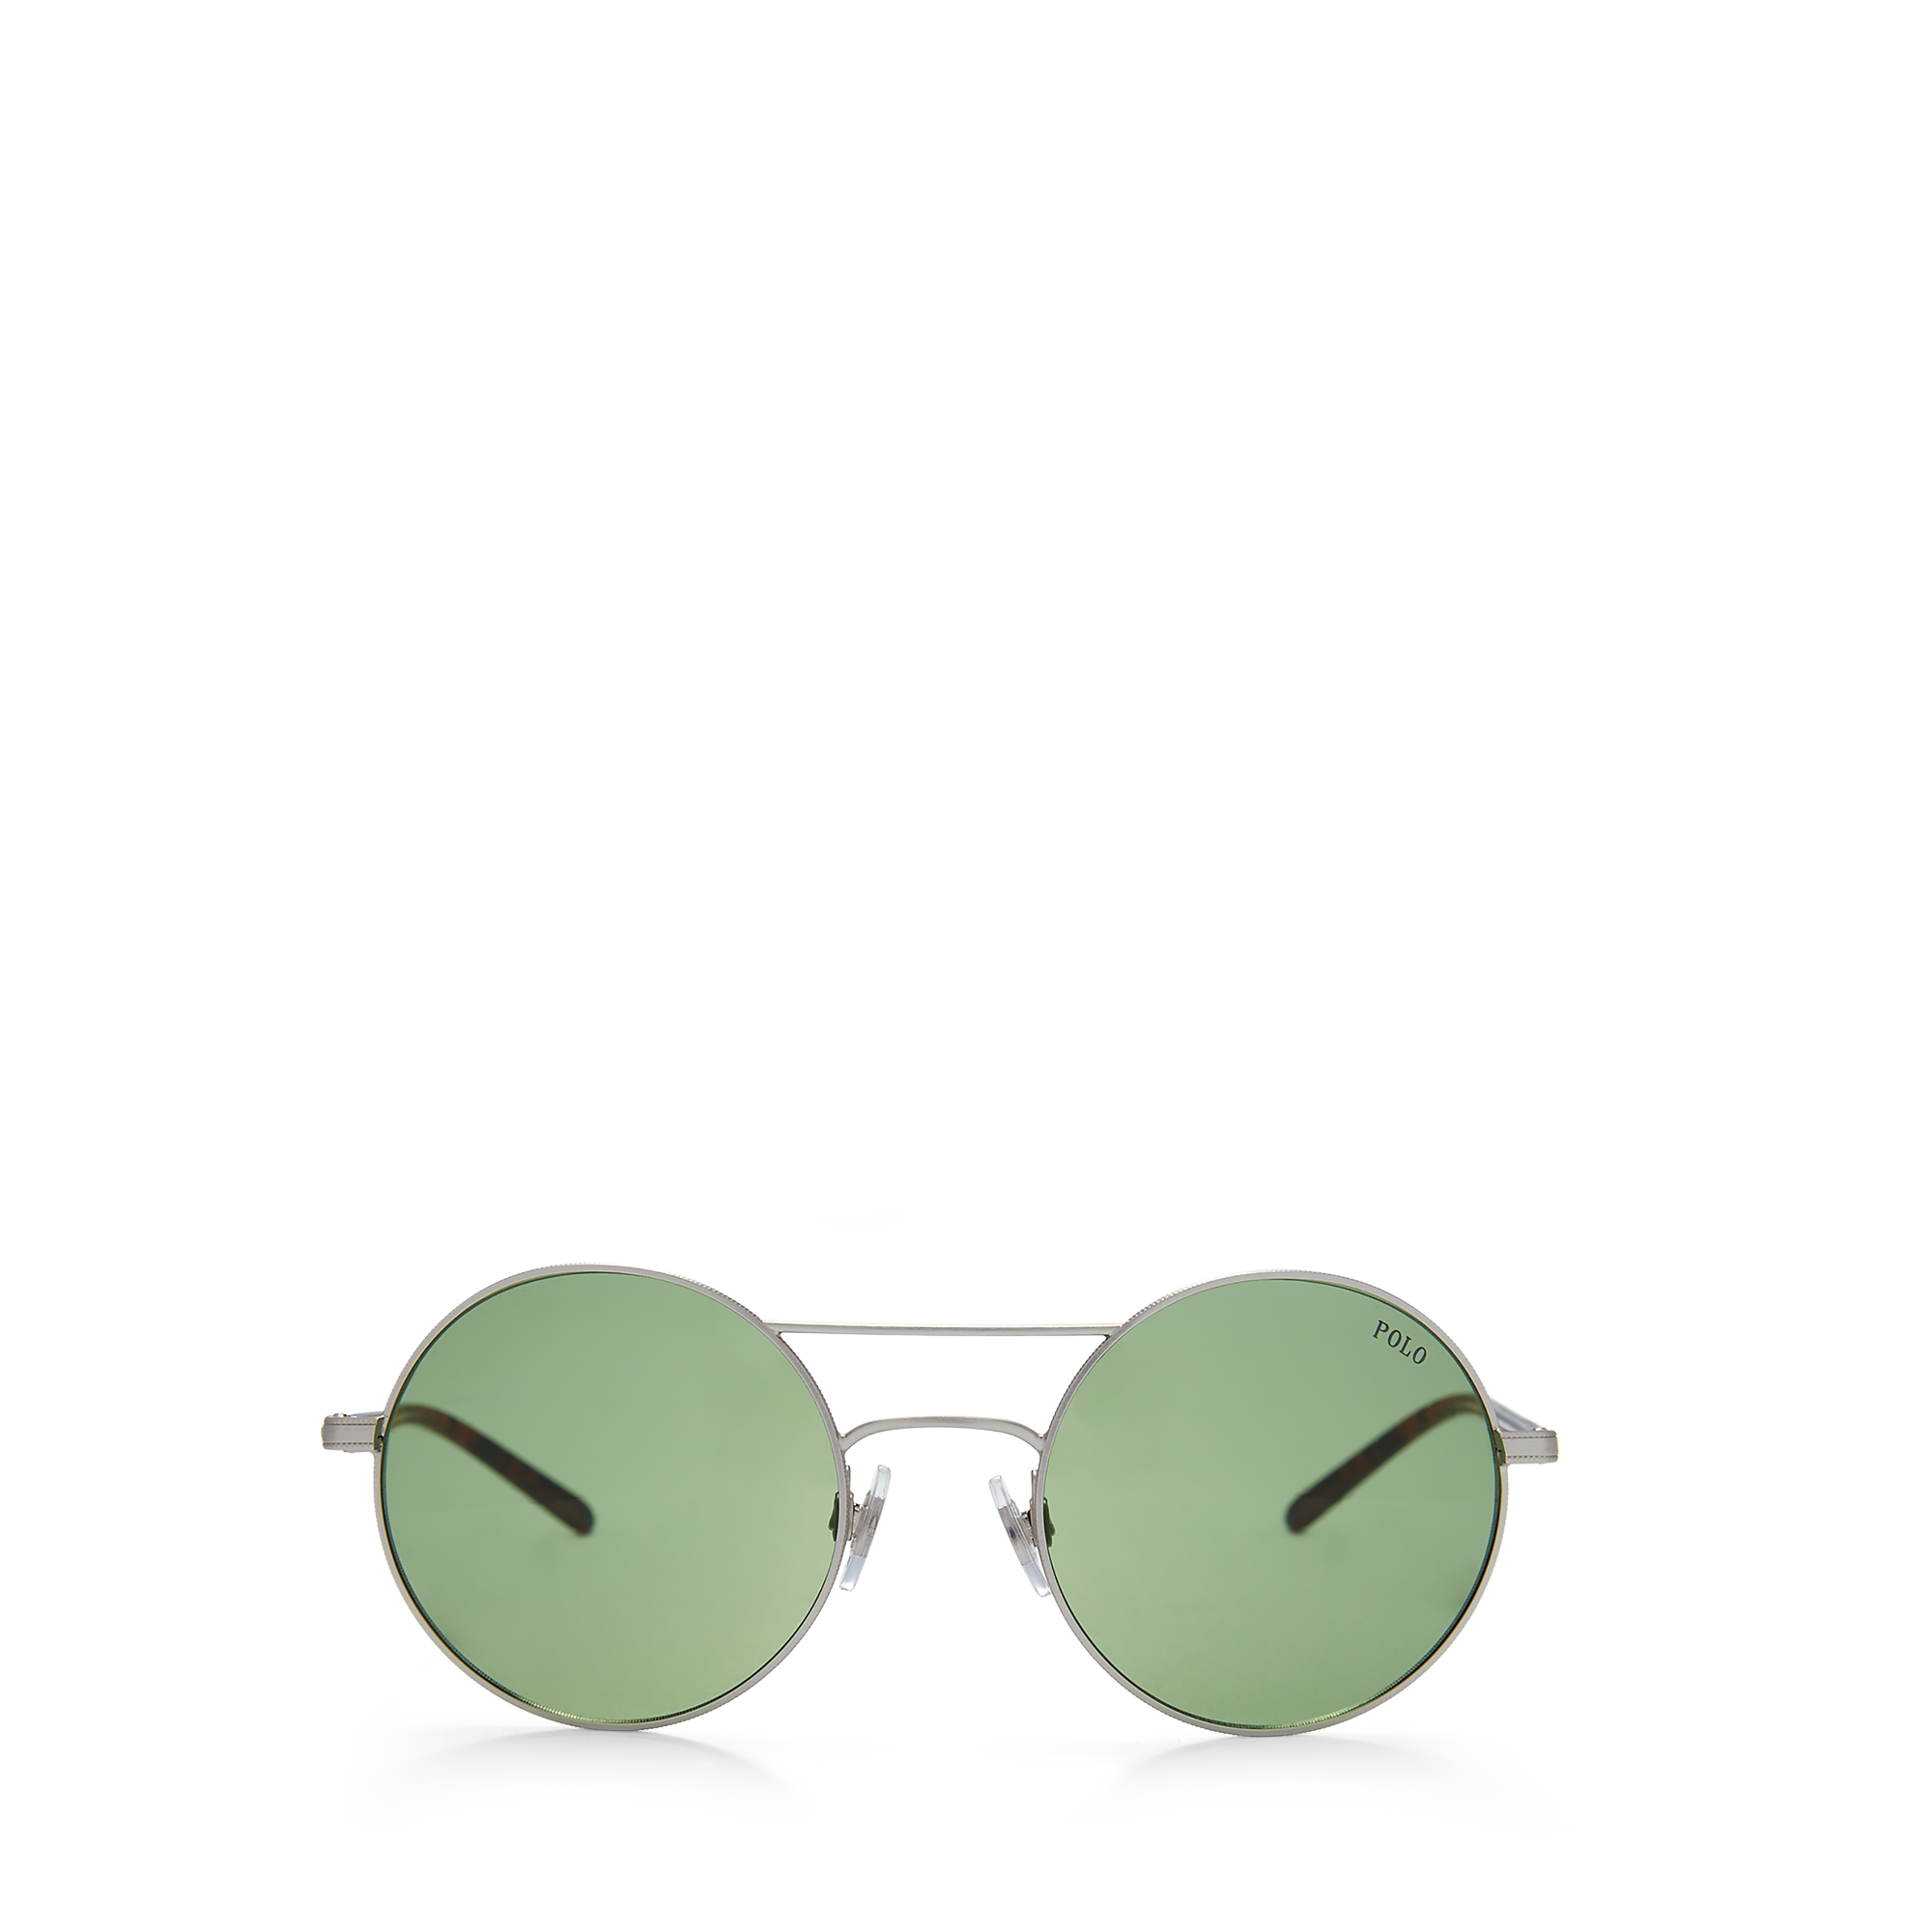 Ralph Lauren Double-Bridge Round Sunglasses. 1